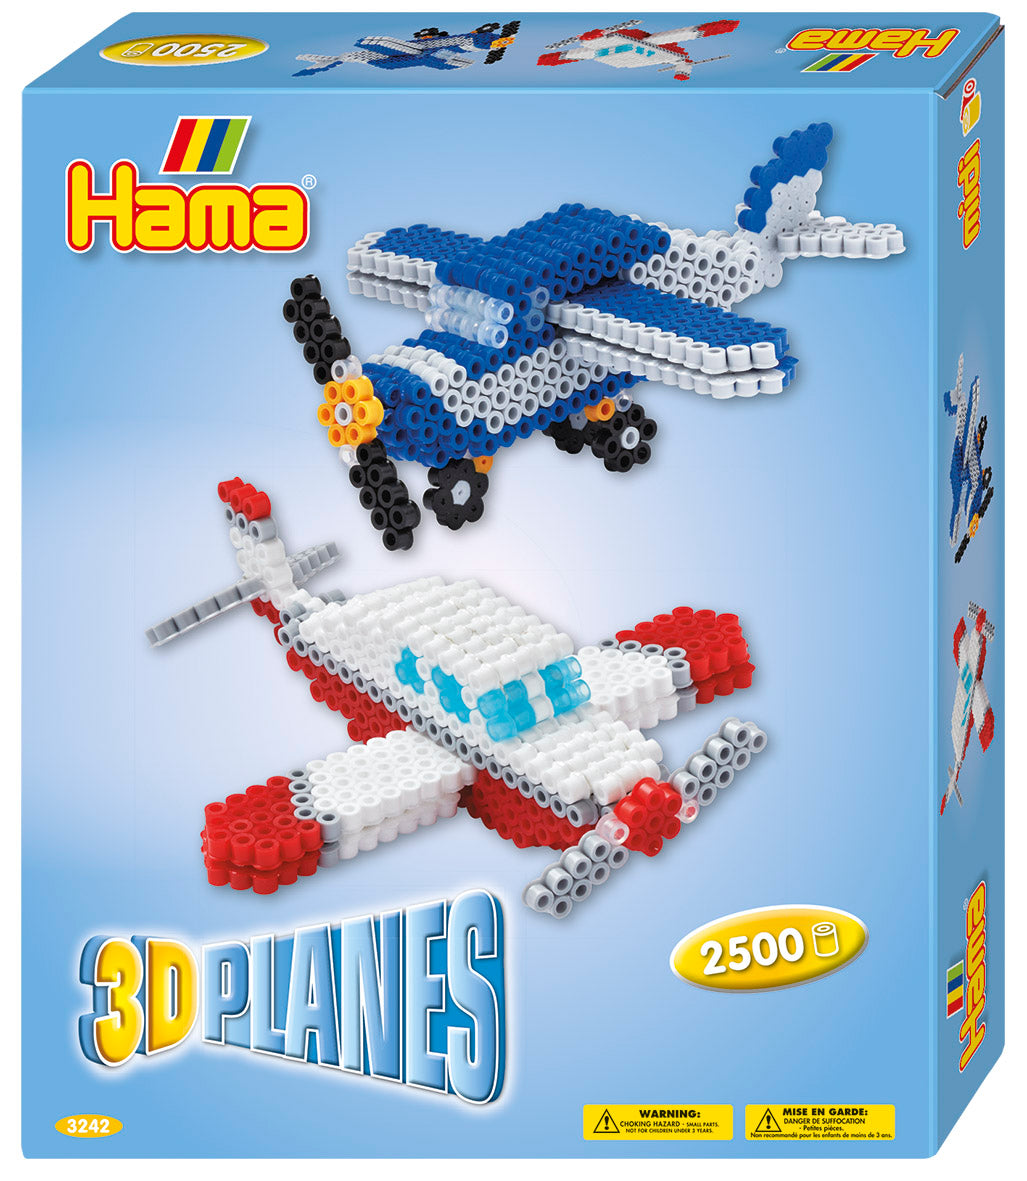 Planes Hama Beads Midi 3D Planes